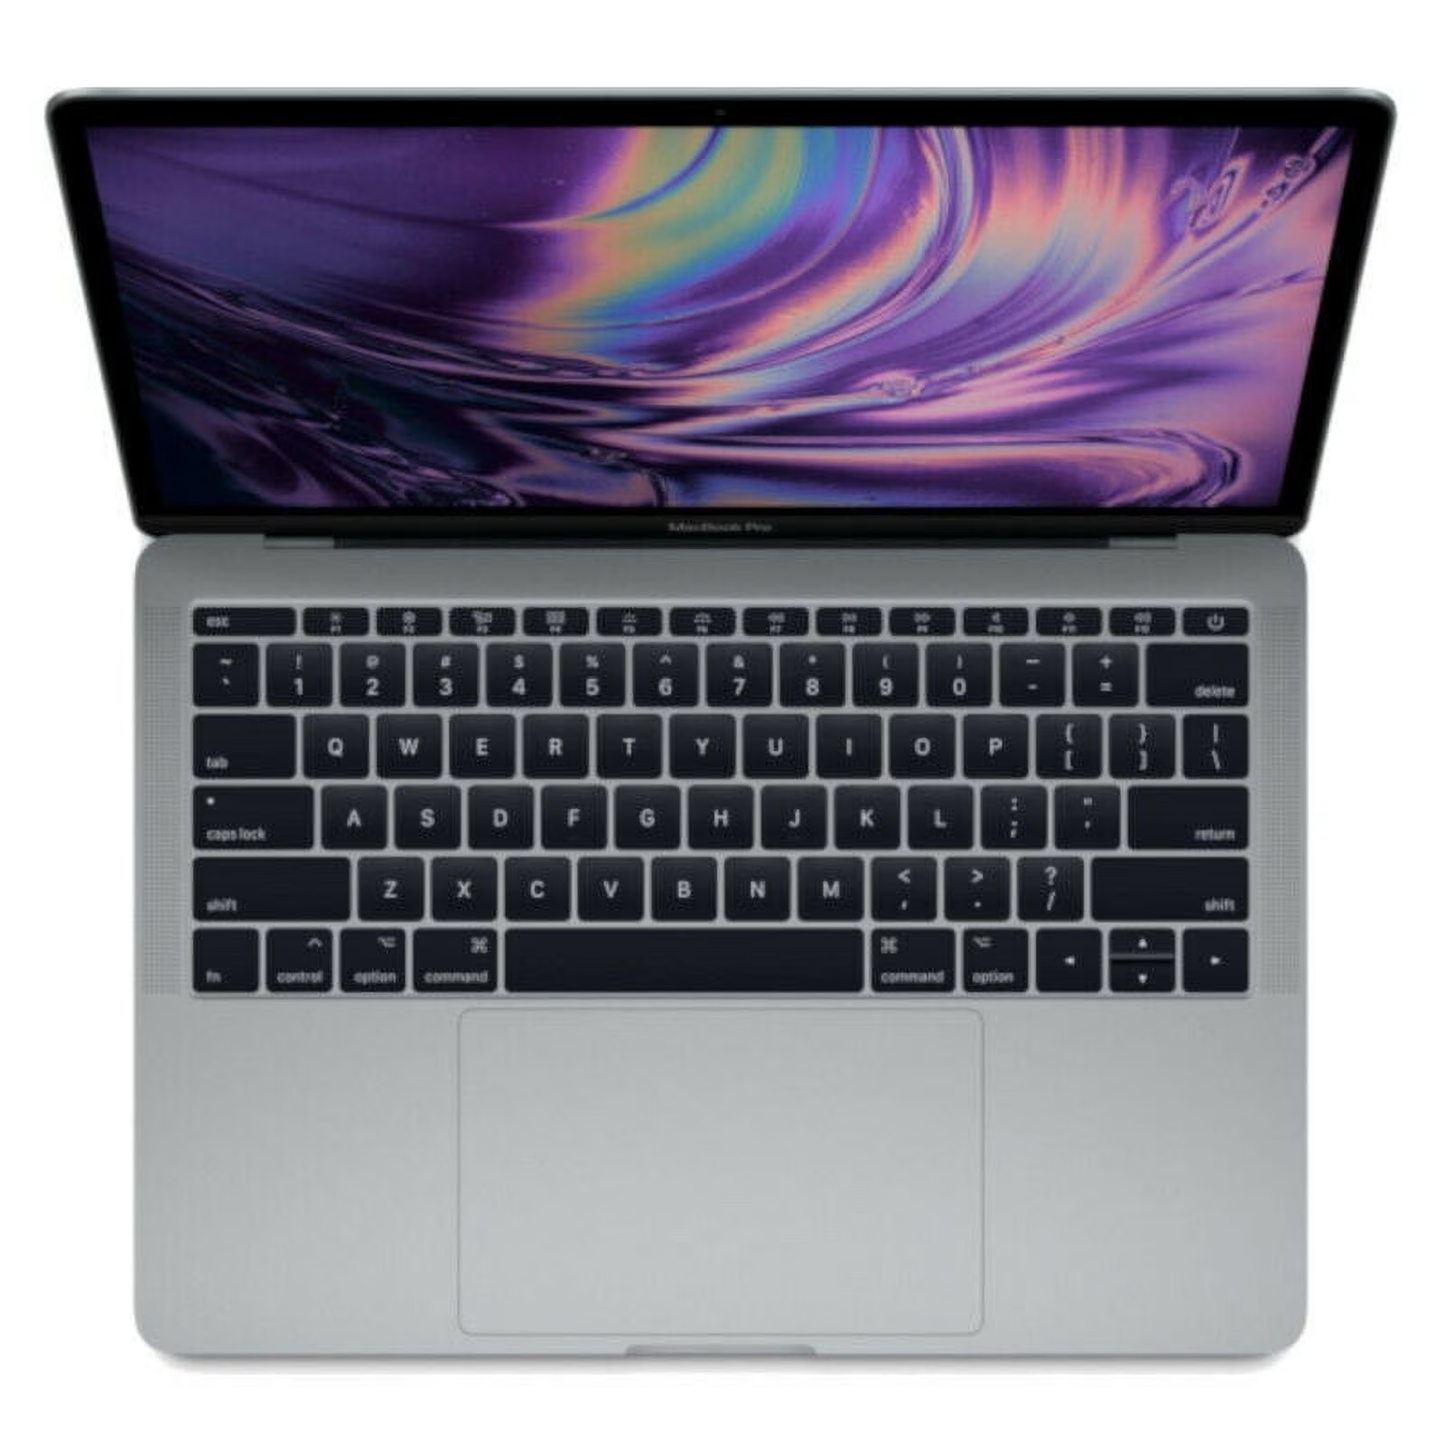 MacBook Pro 2017 Core i5 8GB 256GBバッテリー放電回数89回